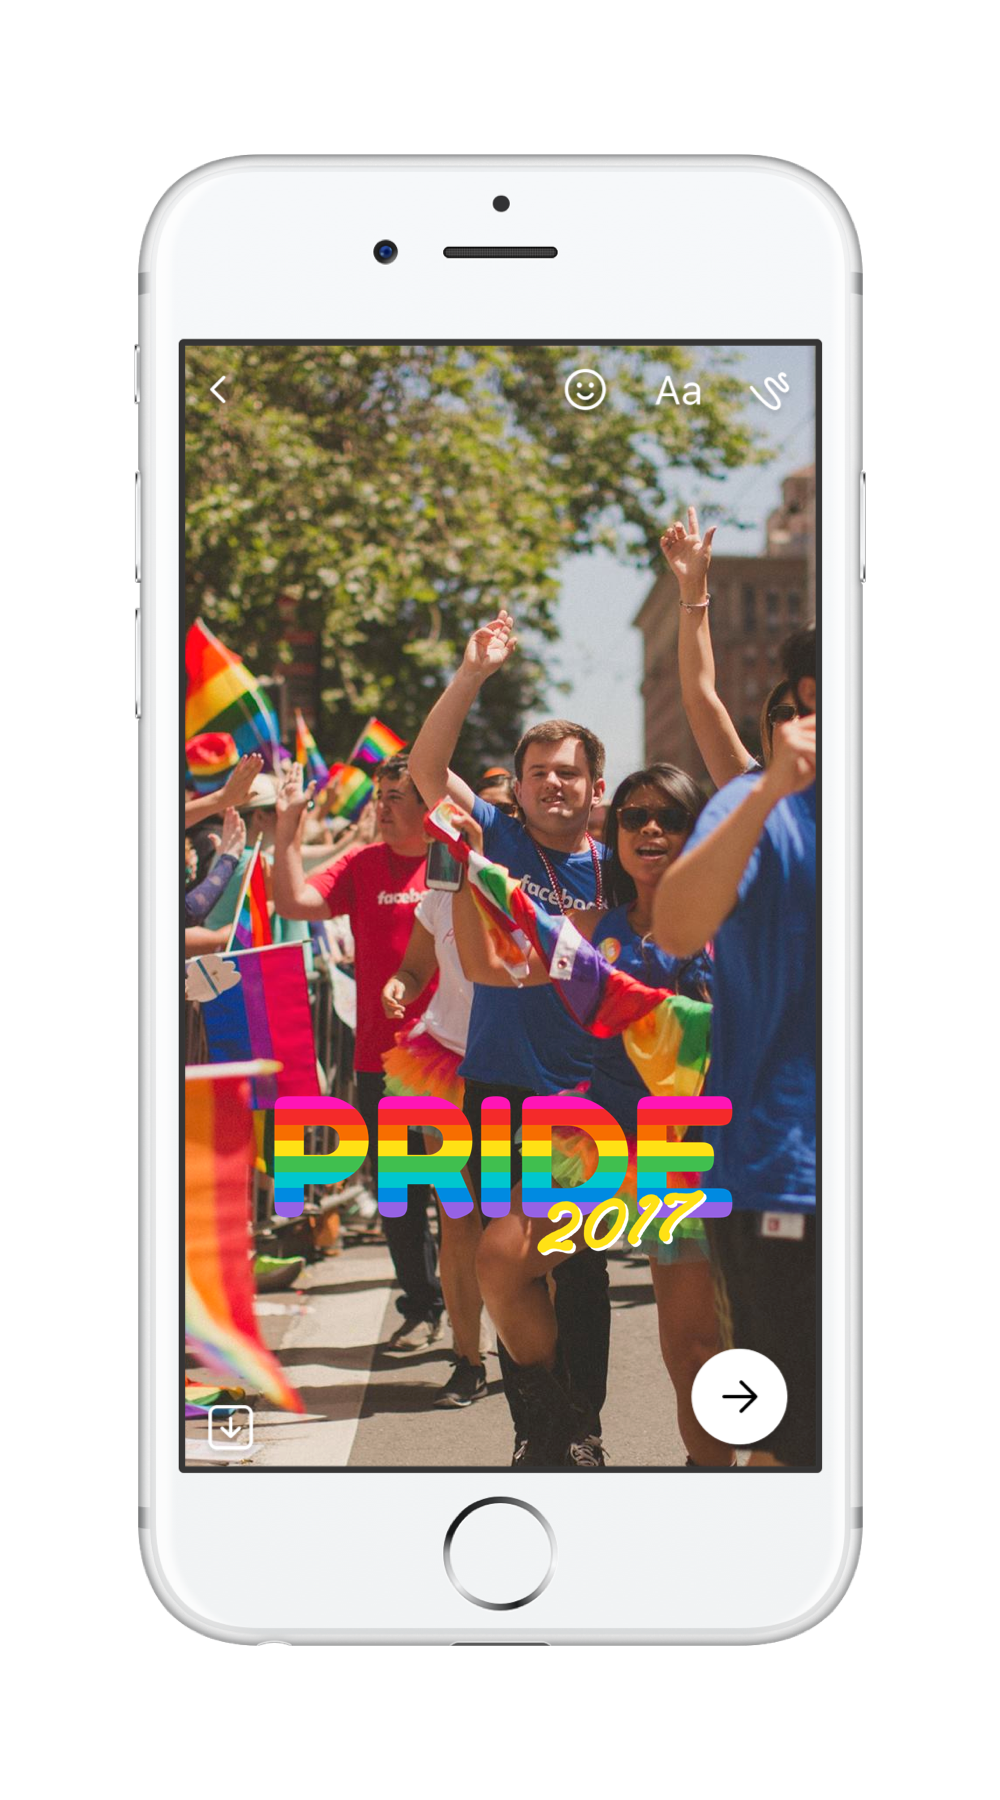 Frame Up with Pride on Messenger